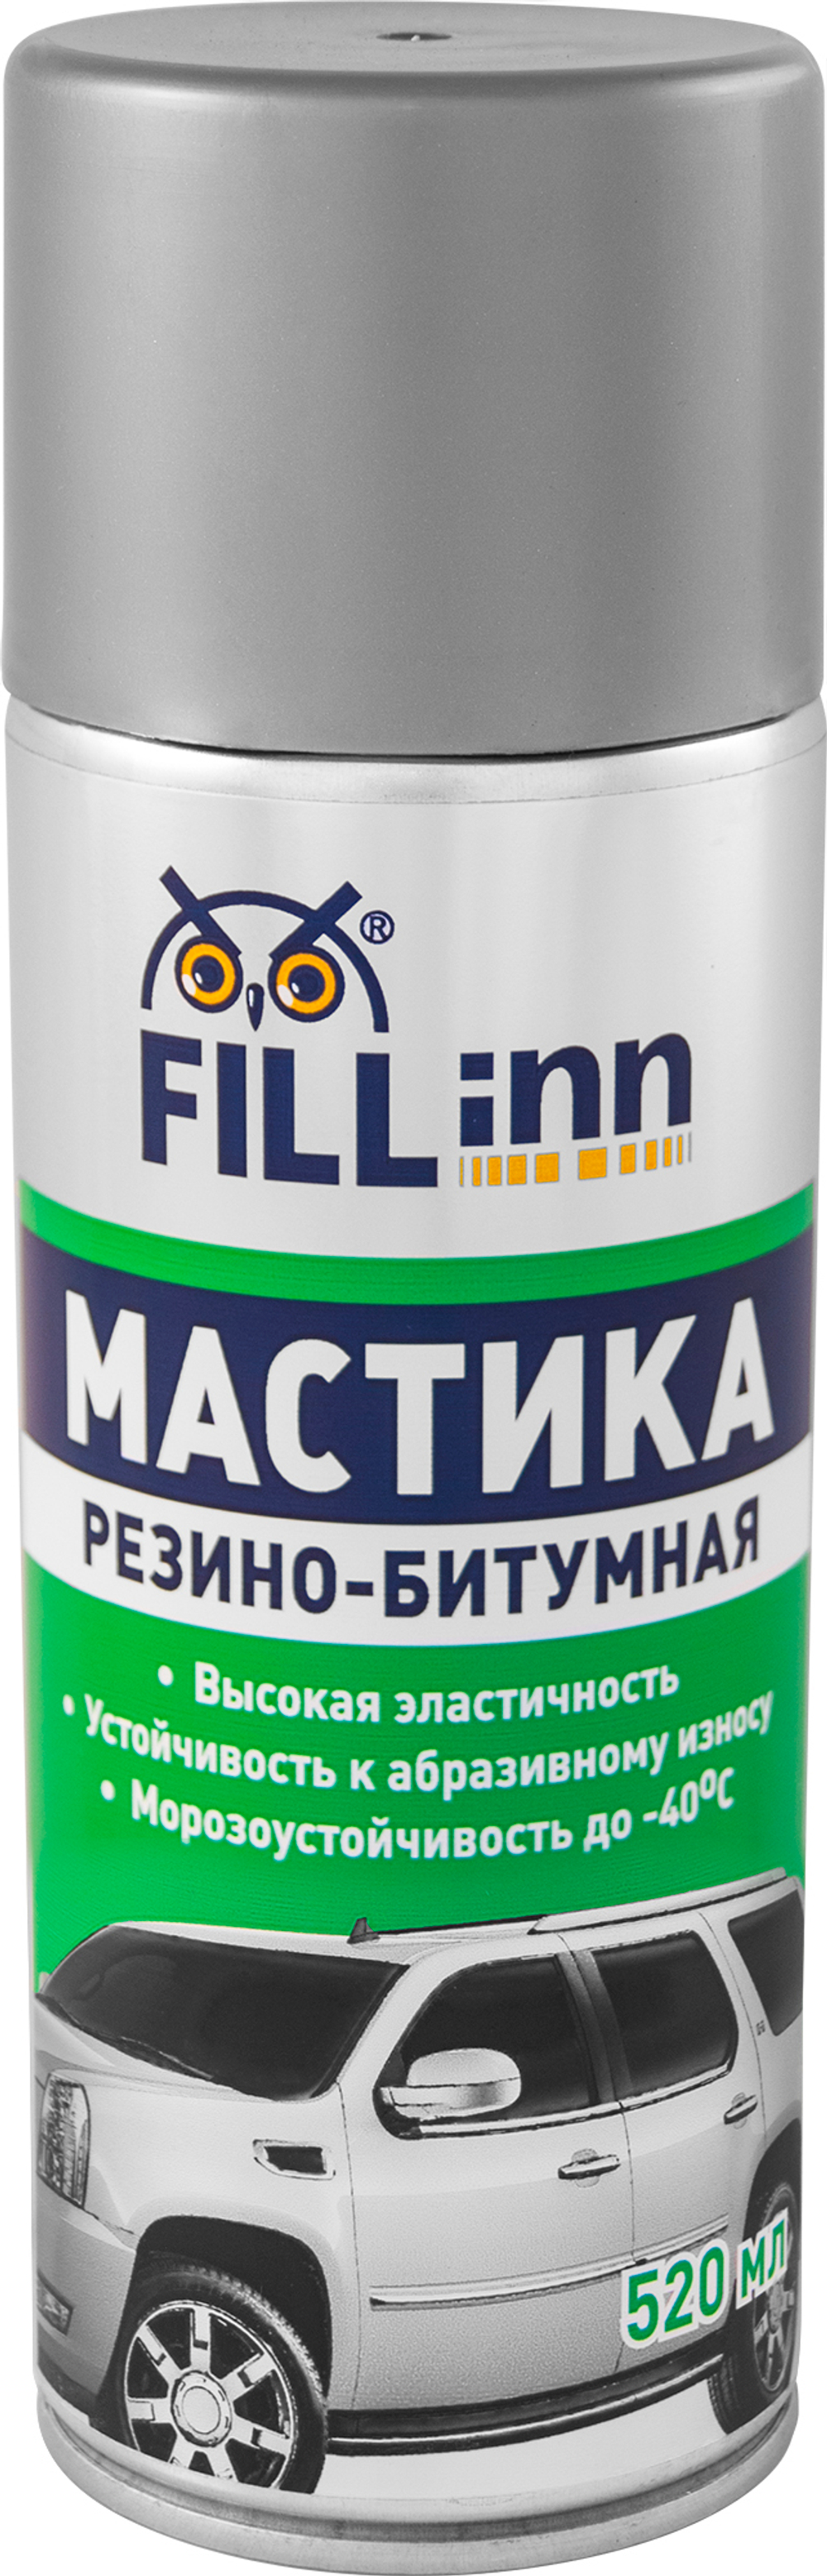 FL019 Мастика резино-битумная (аэрозоль), 520 мл